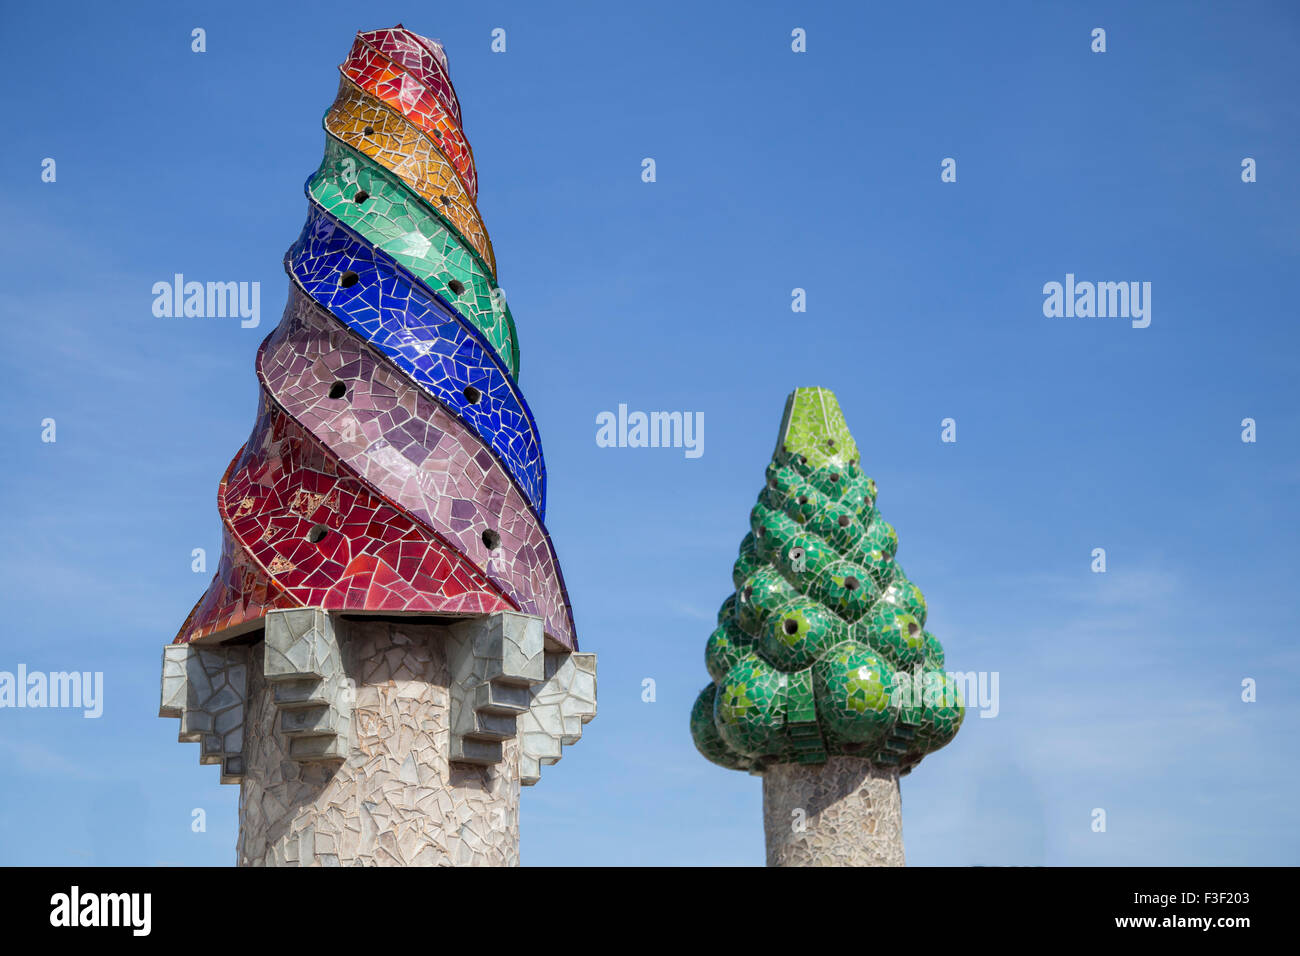 Barcelona, Spain - September 25, 2015: Gaudi Chimney, Palau Guell, Gaudi broken tile mosaics and strange decorated chimneys are Stock Photo